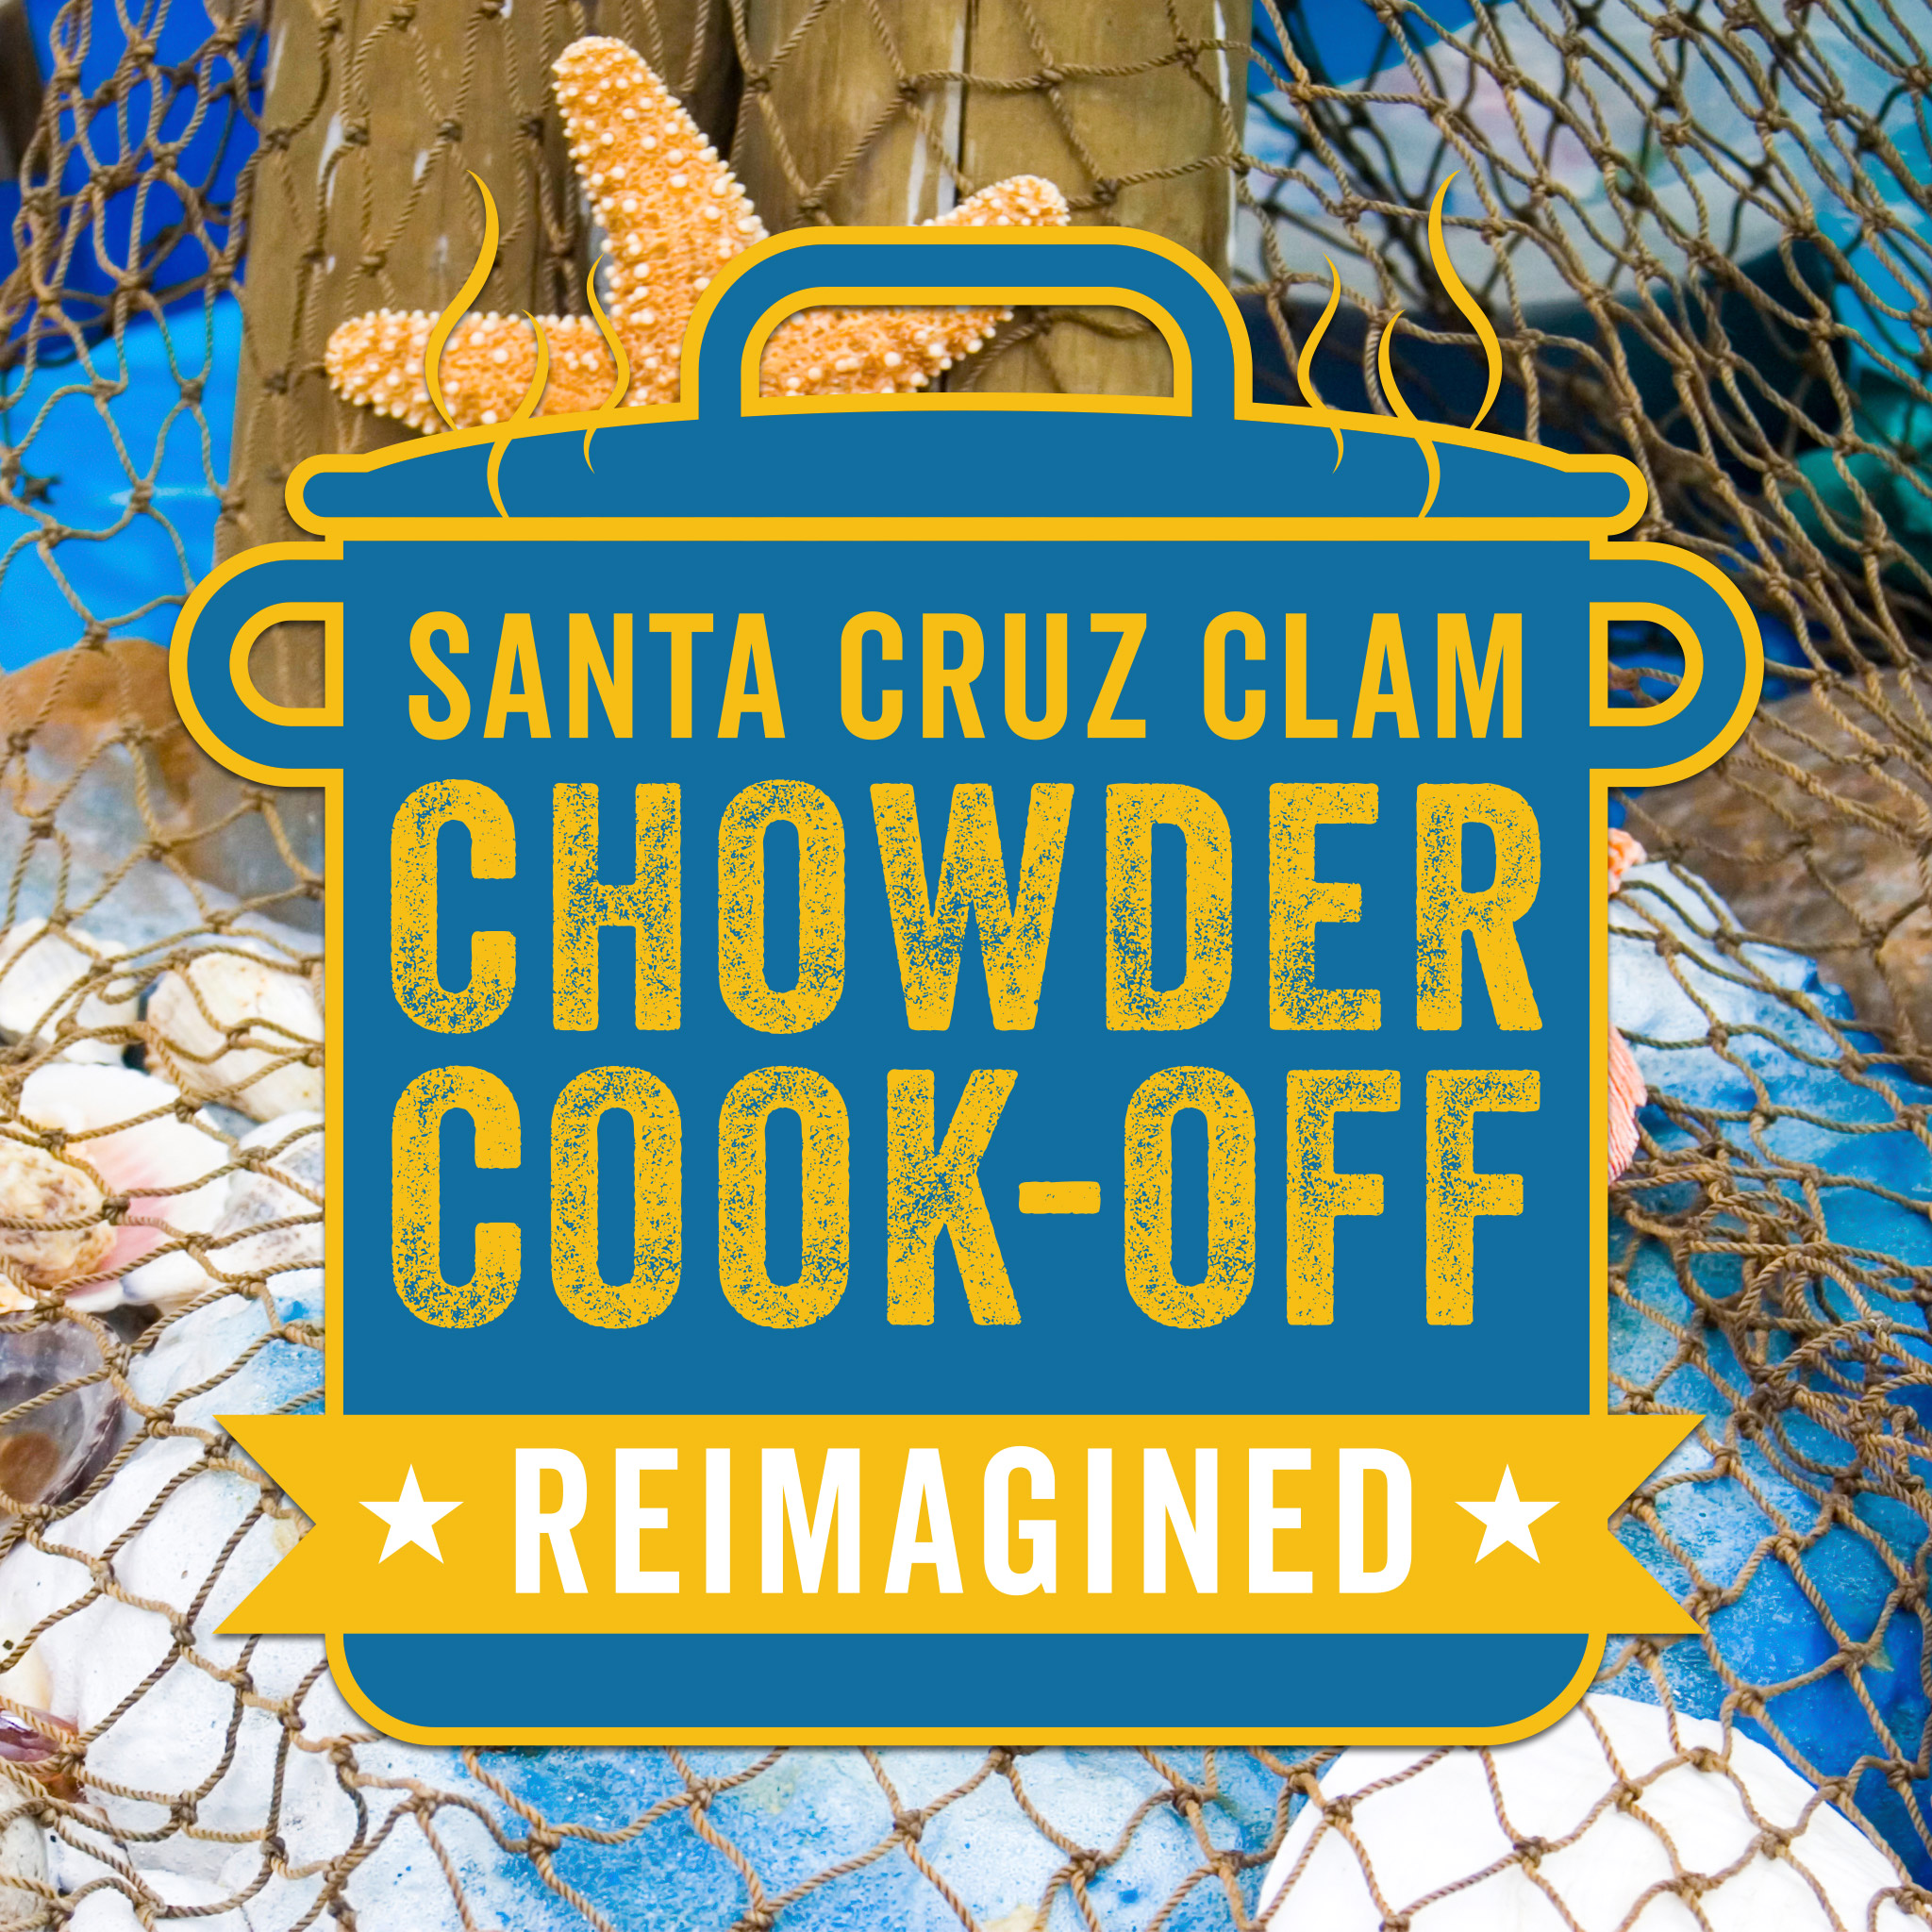 The 40th Annual Santa Cruz Clam Chowder Cookoff Reimagined